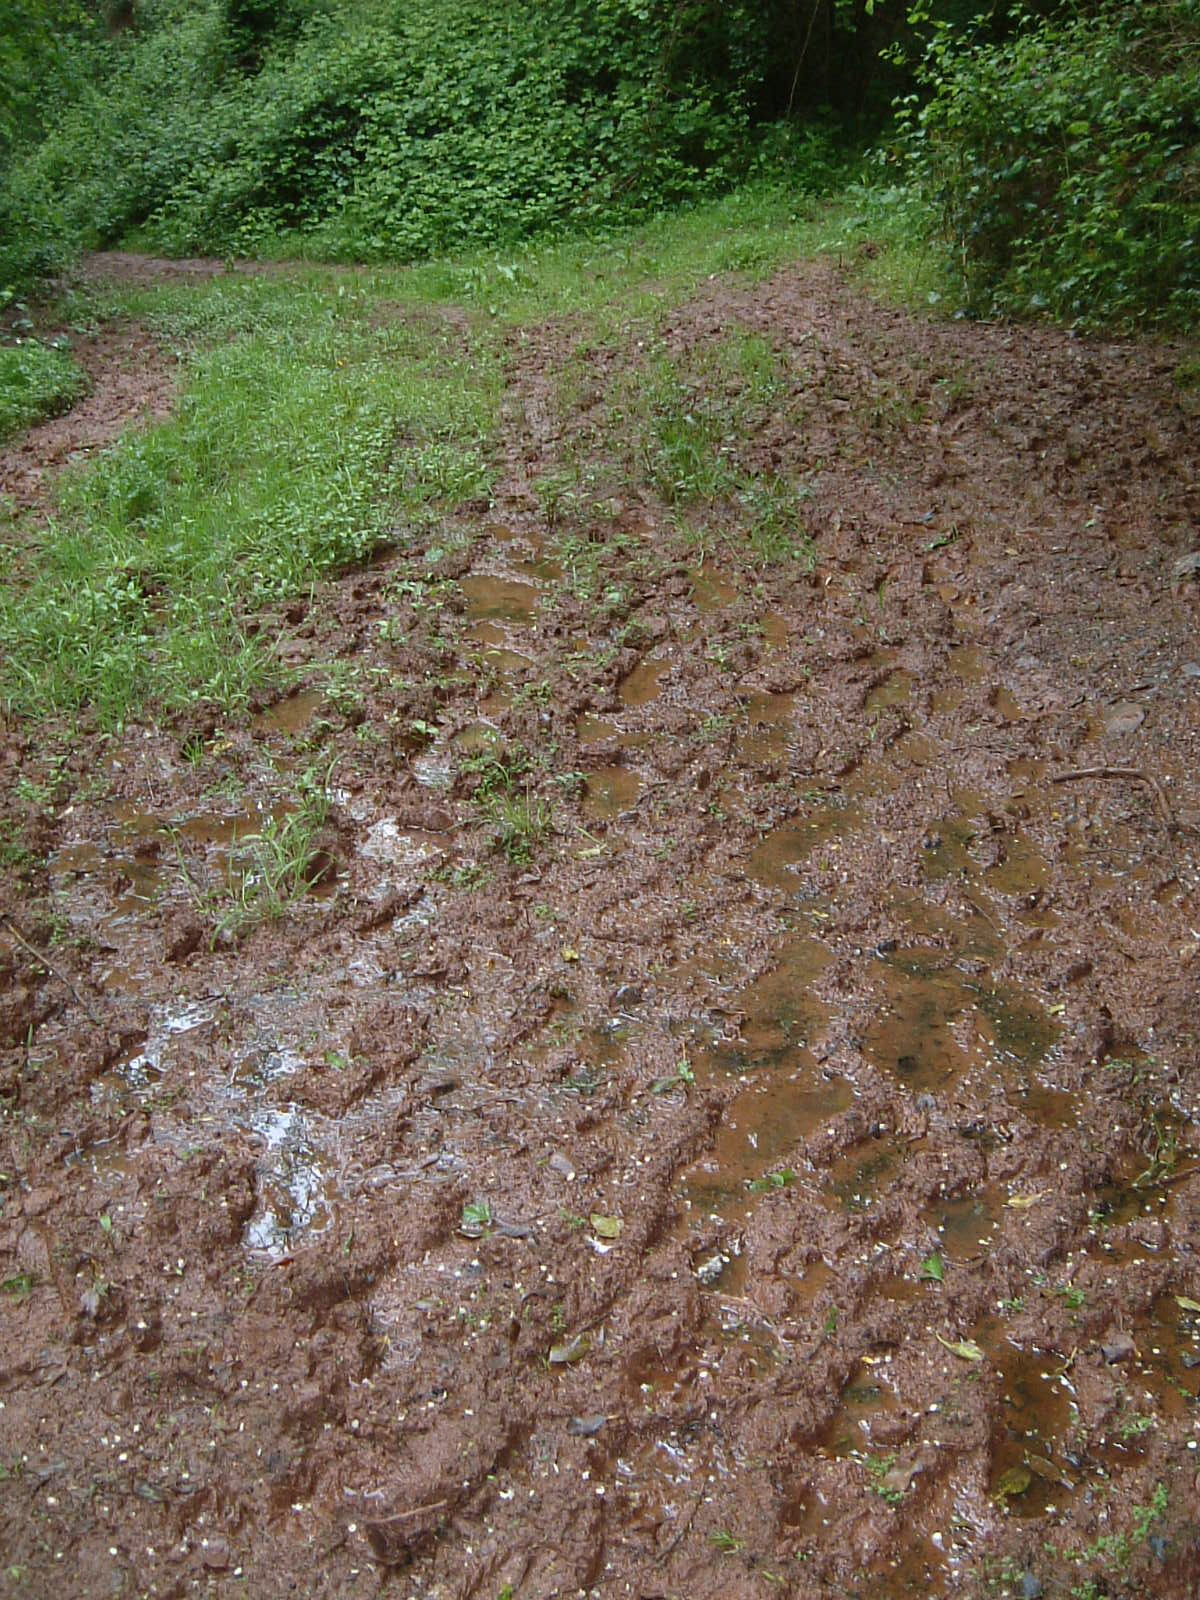 A very muddy path